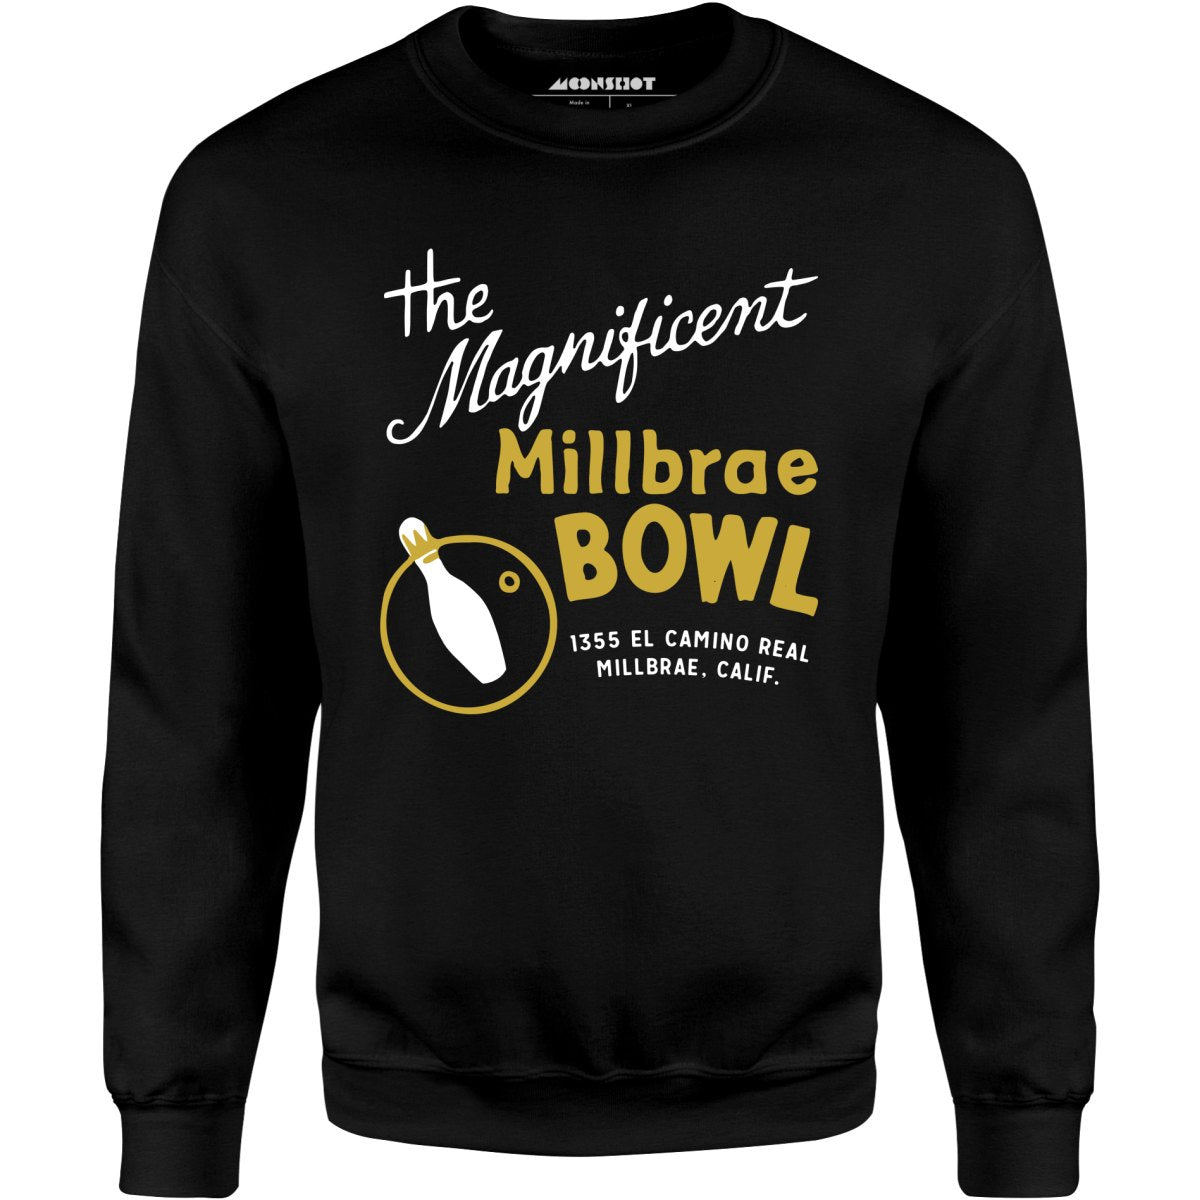 Millbrae Bowl - Millbrae, CA - Vintage Bowling Alley - Unisex Sweatshirt